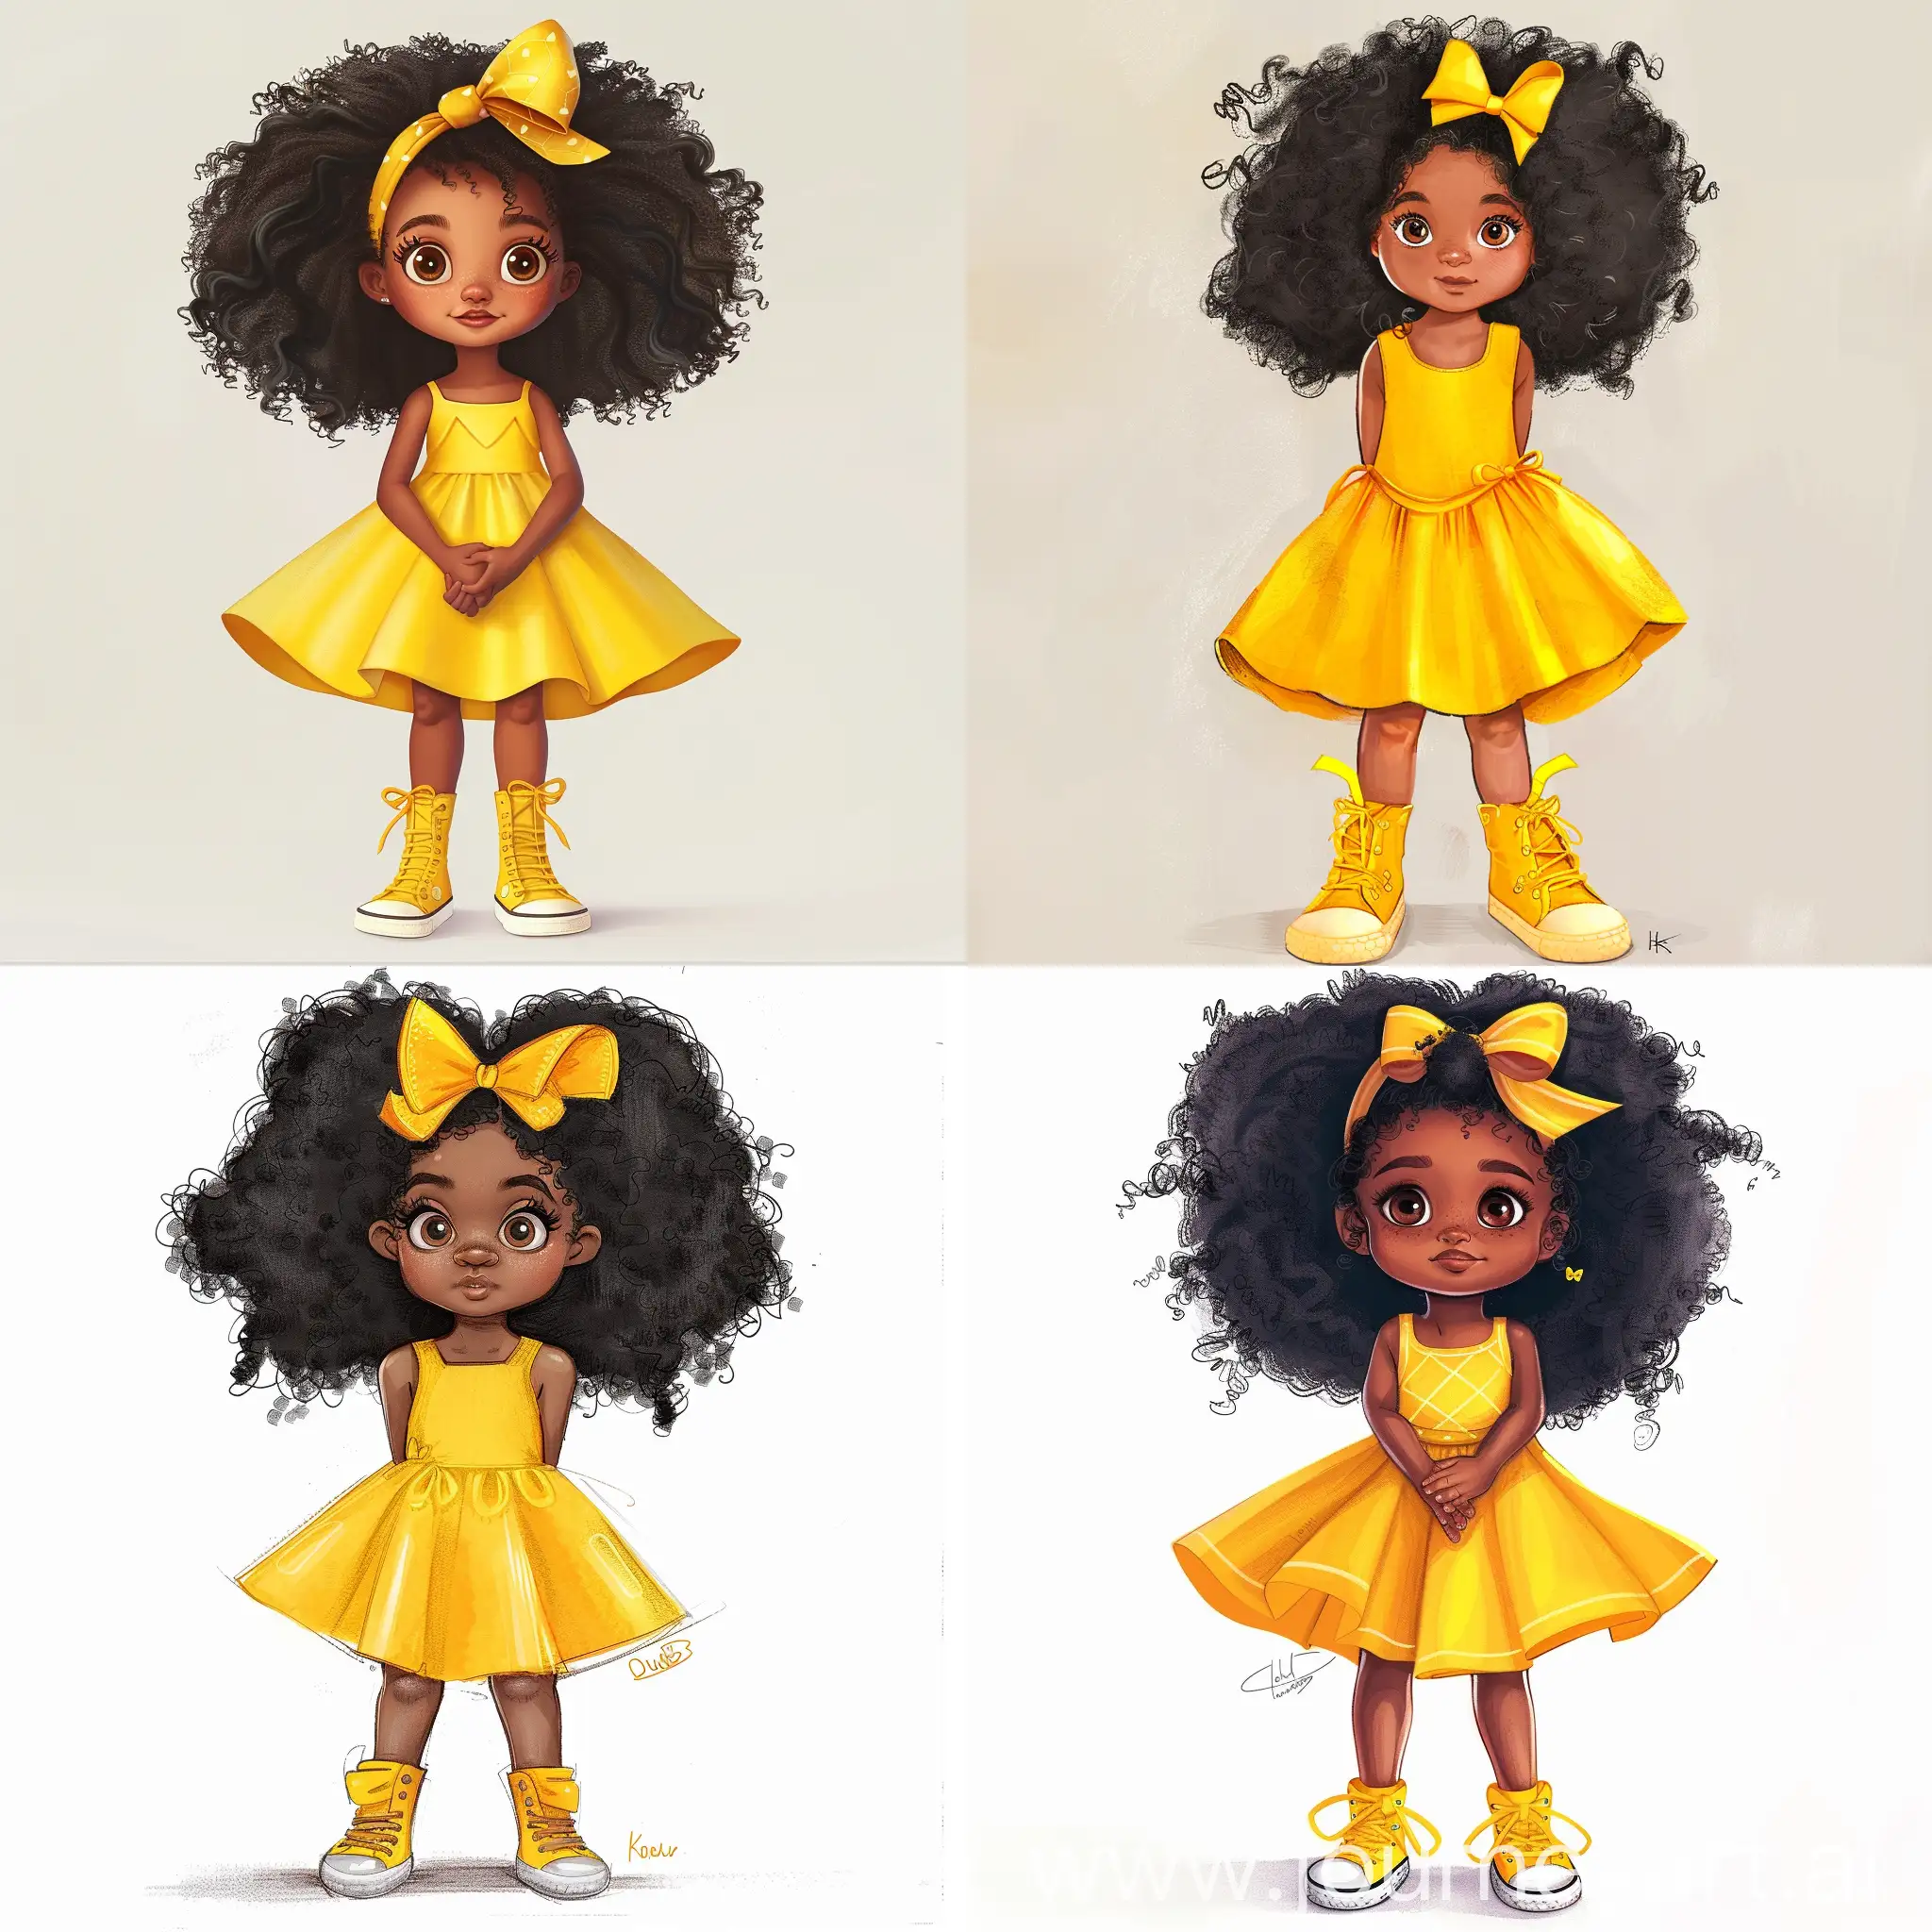 Adorable-7YearOld-Black-Girl-in-Sunny-Yellow-Dress